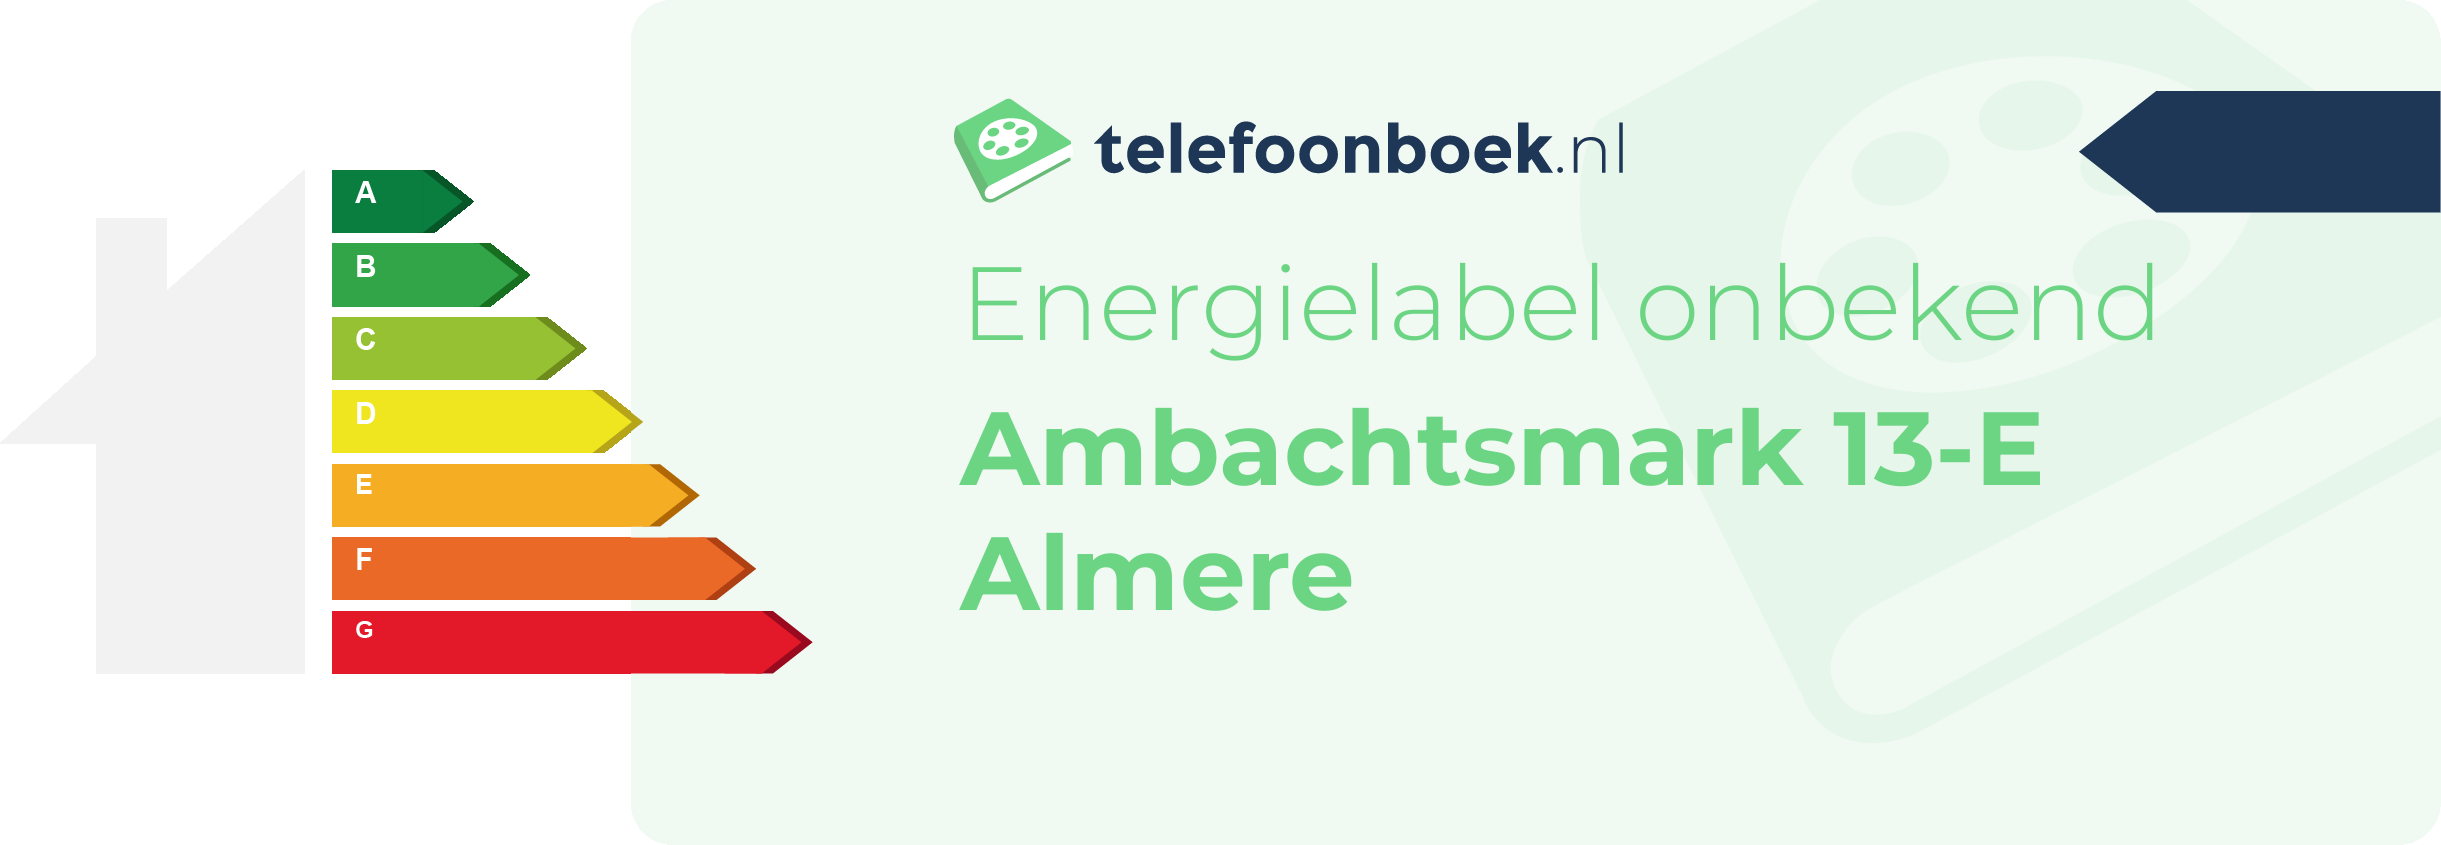 Energielabel Ambachtsmark 13-E Almere